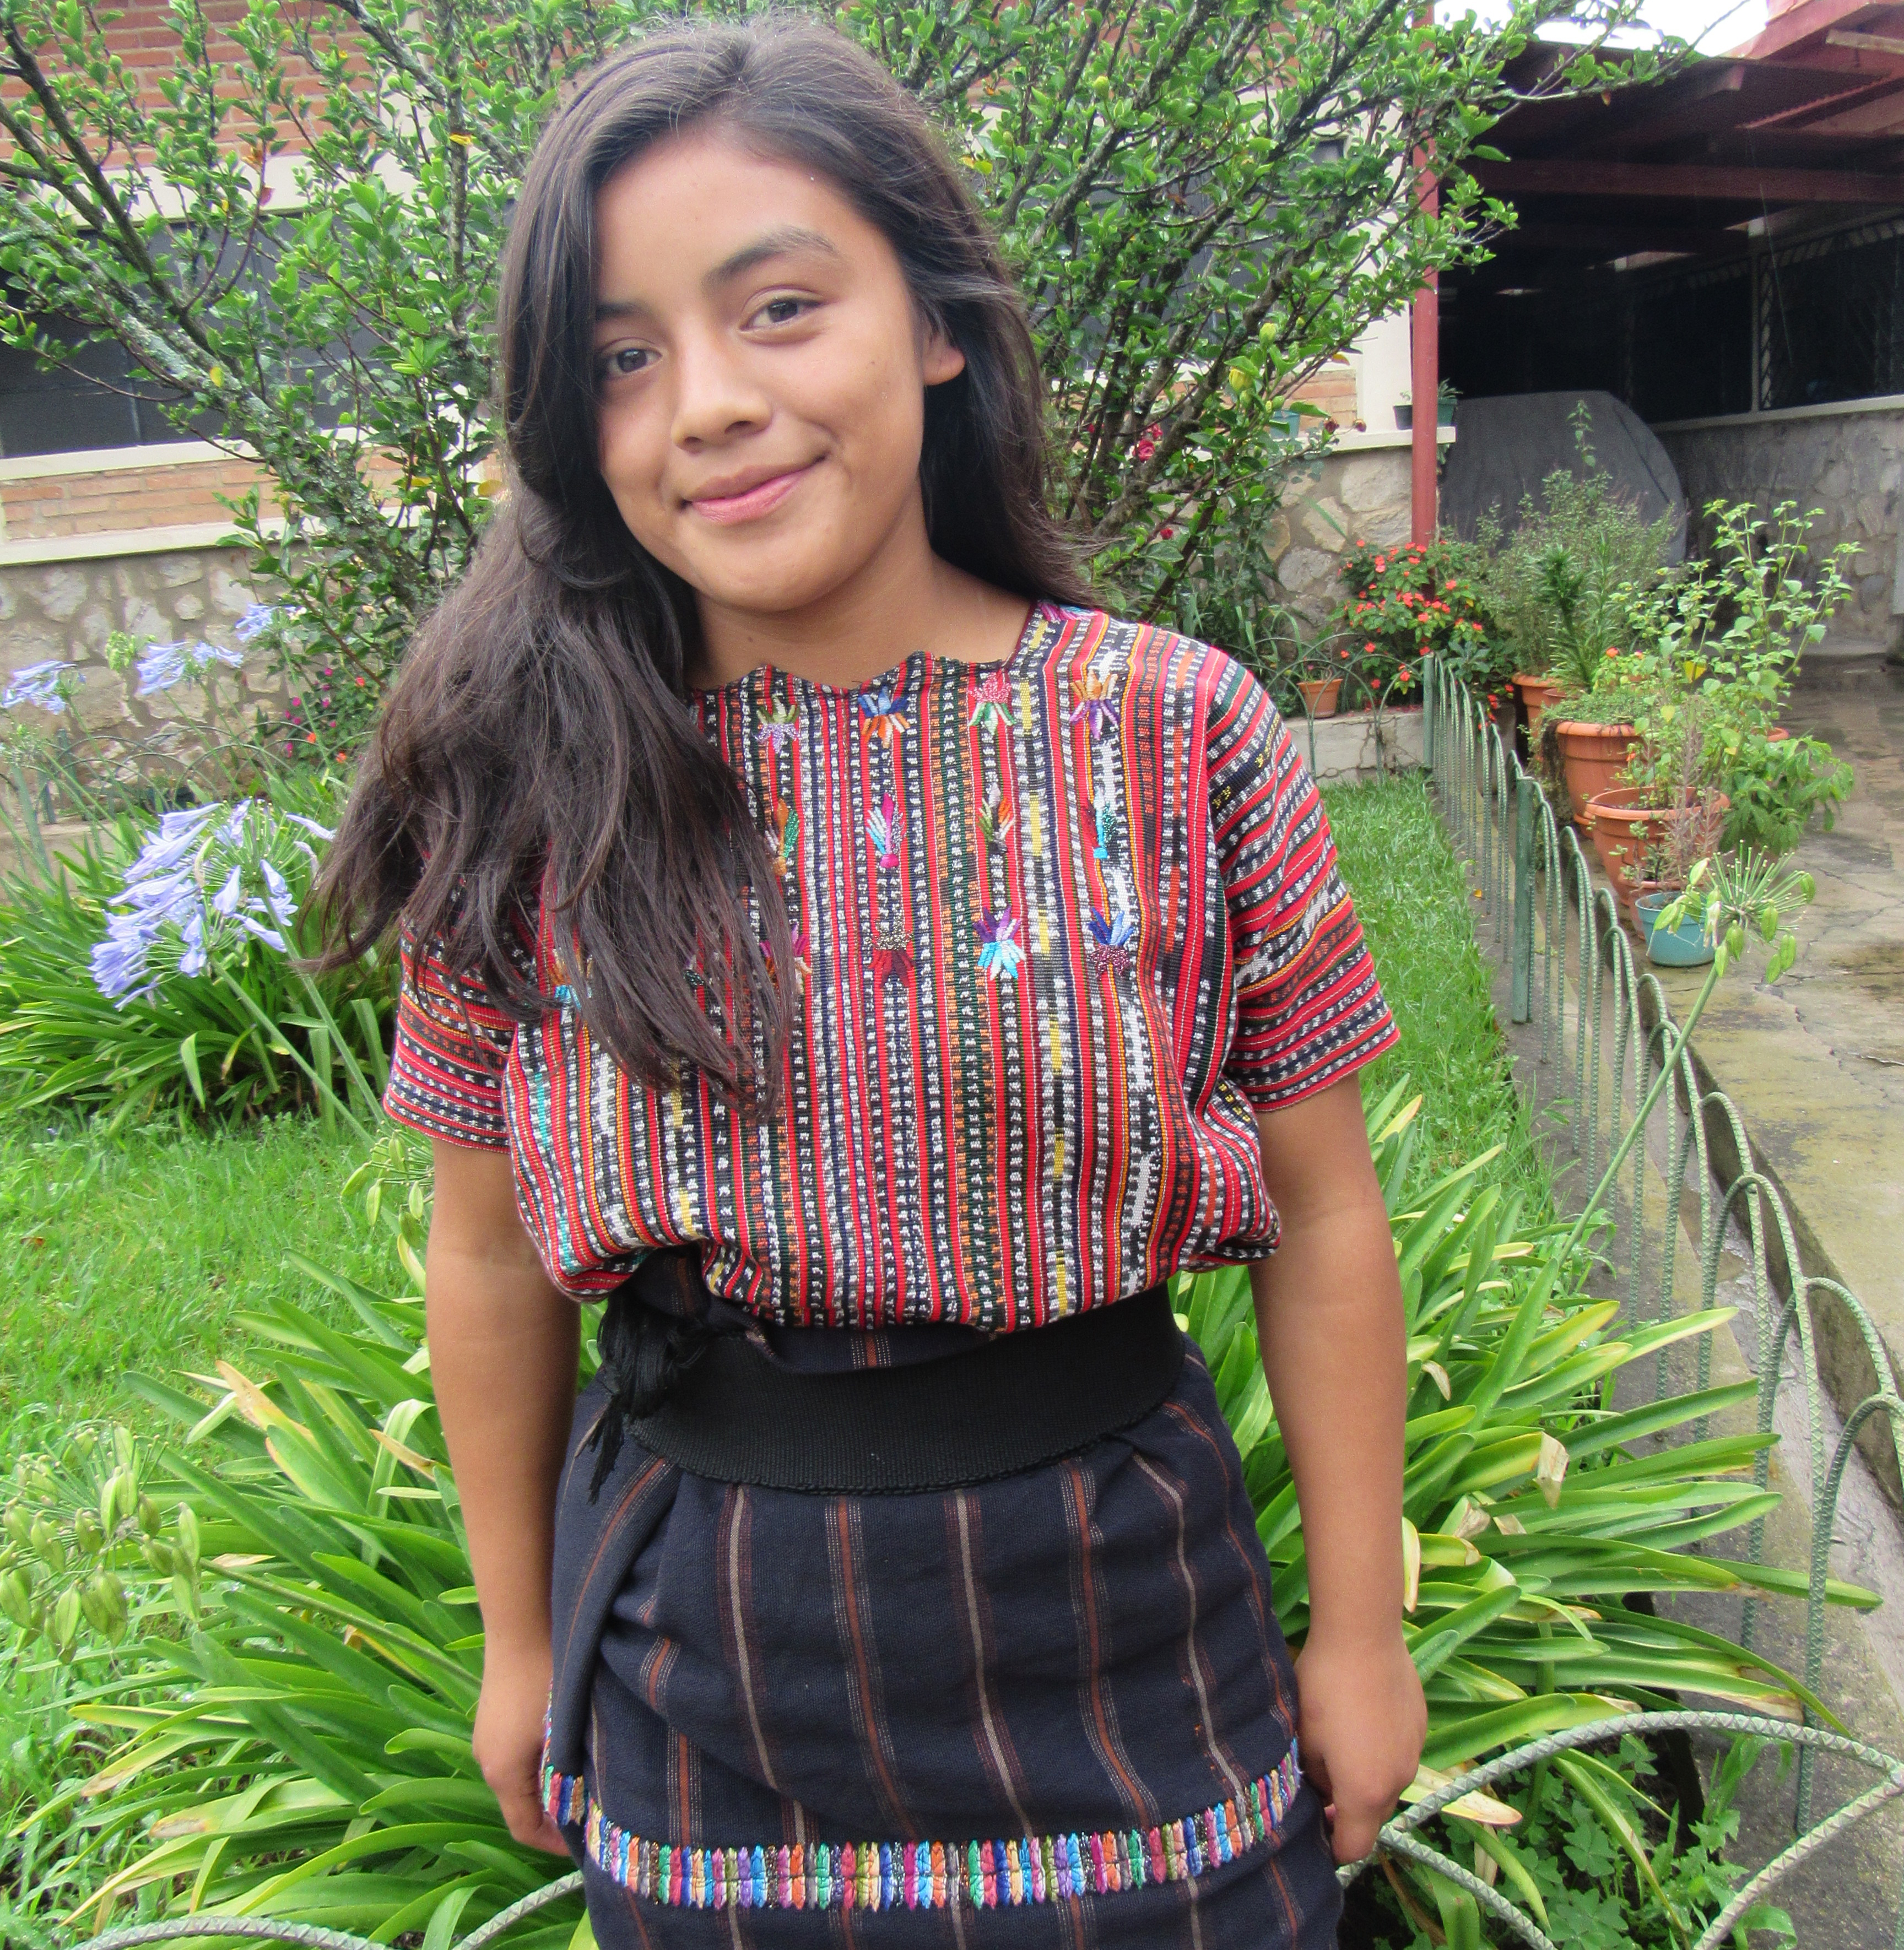 Educate girls in Guatemala